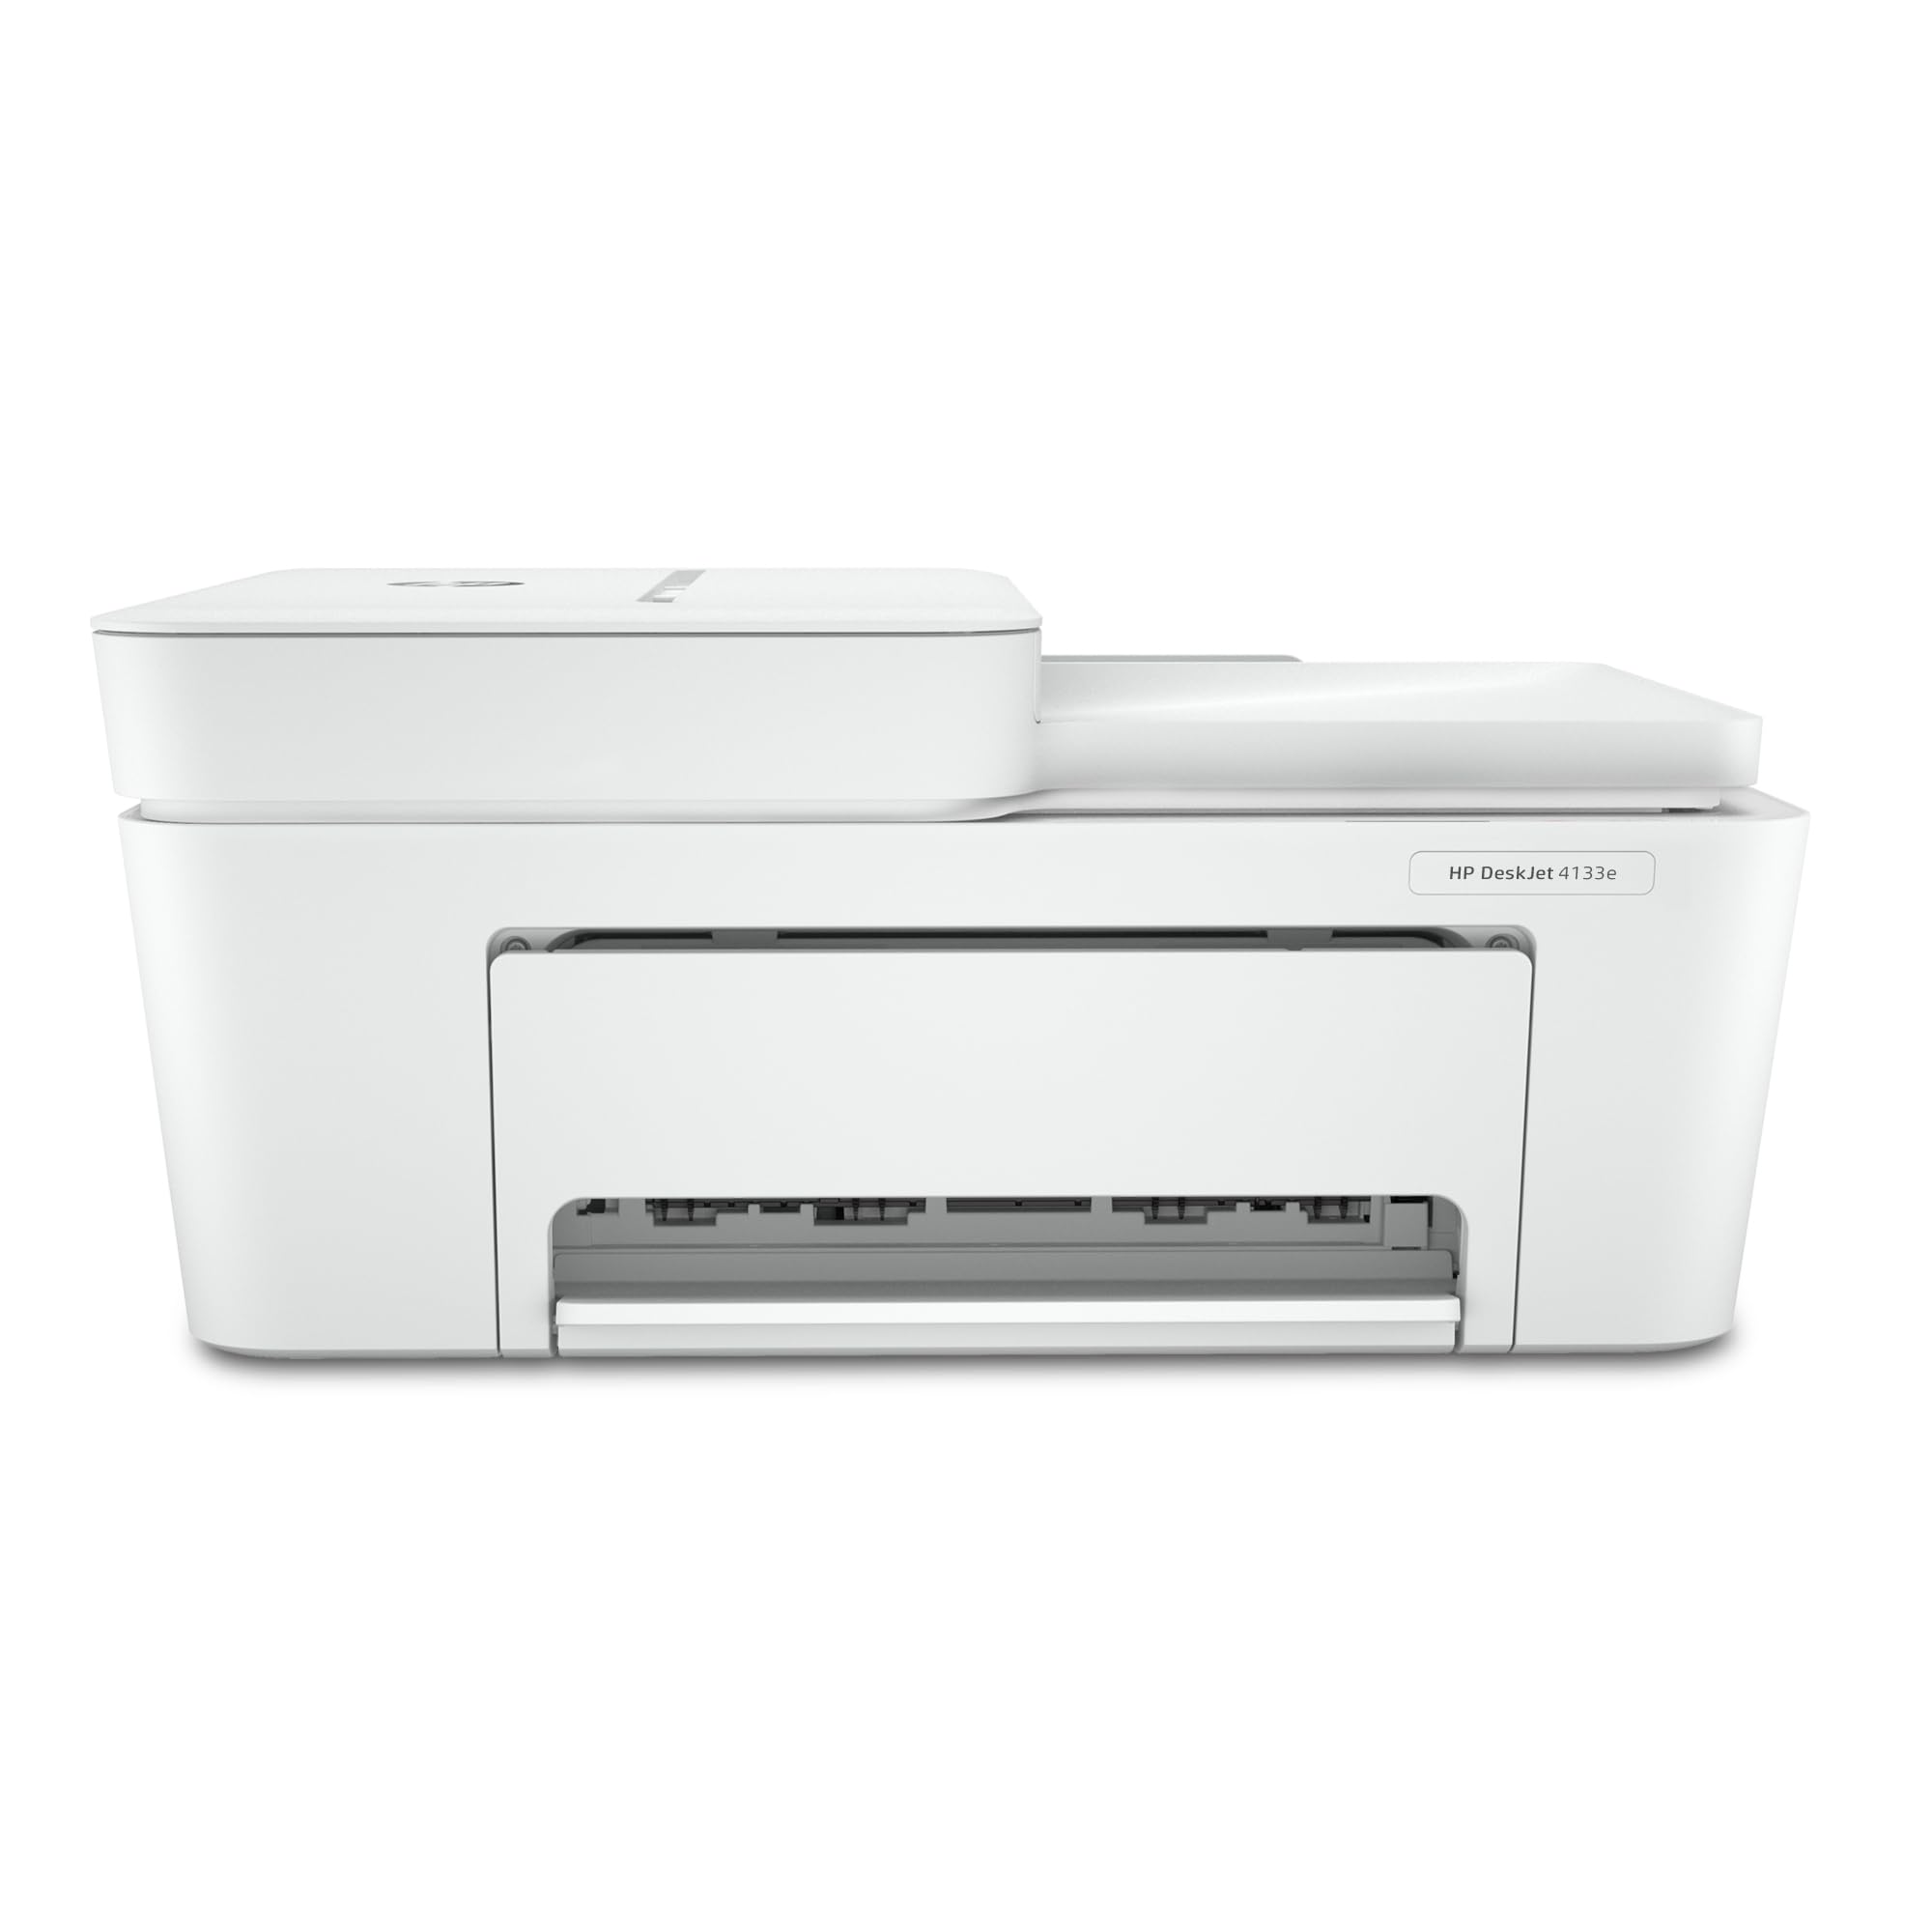 HP DeskJet 4133e 一体式打印机，附赠 6 个月即时墨水，白色